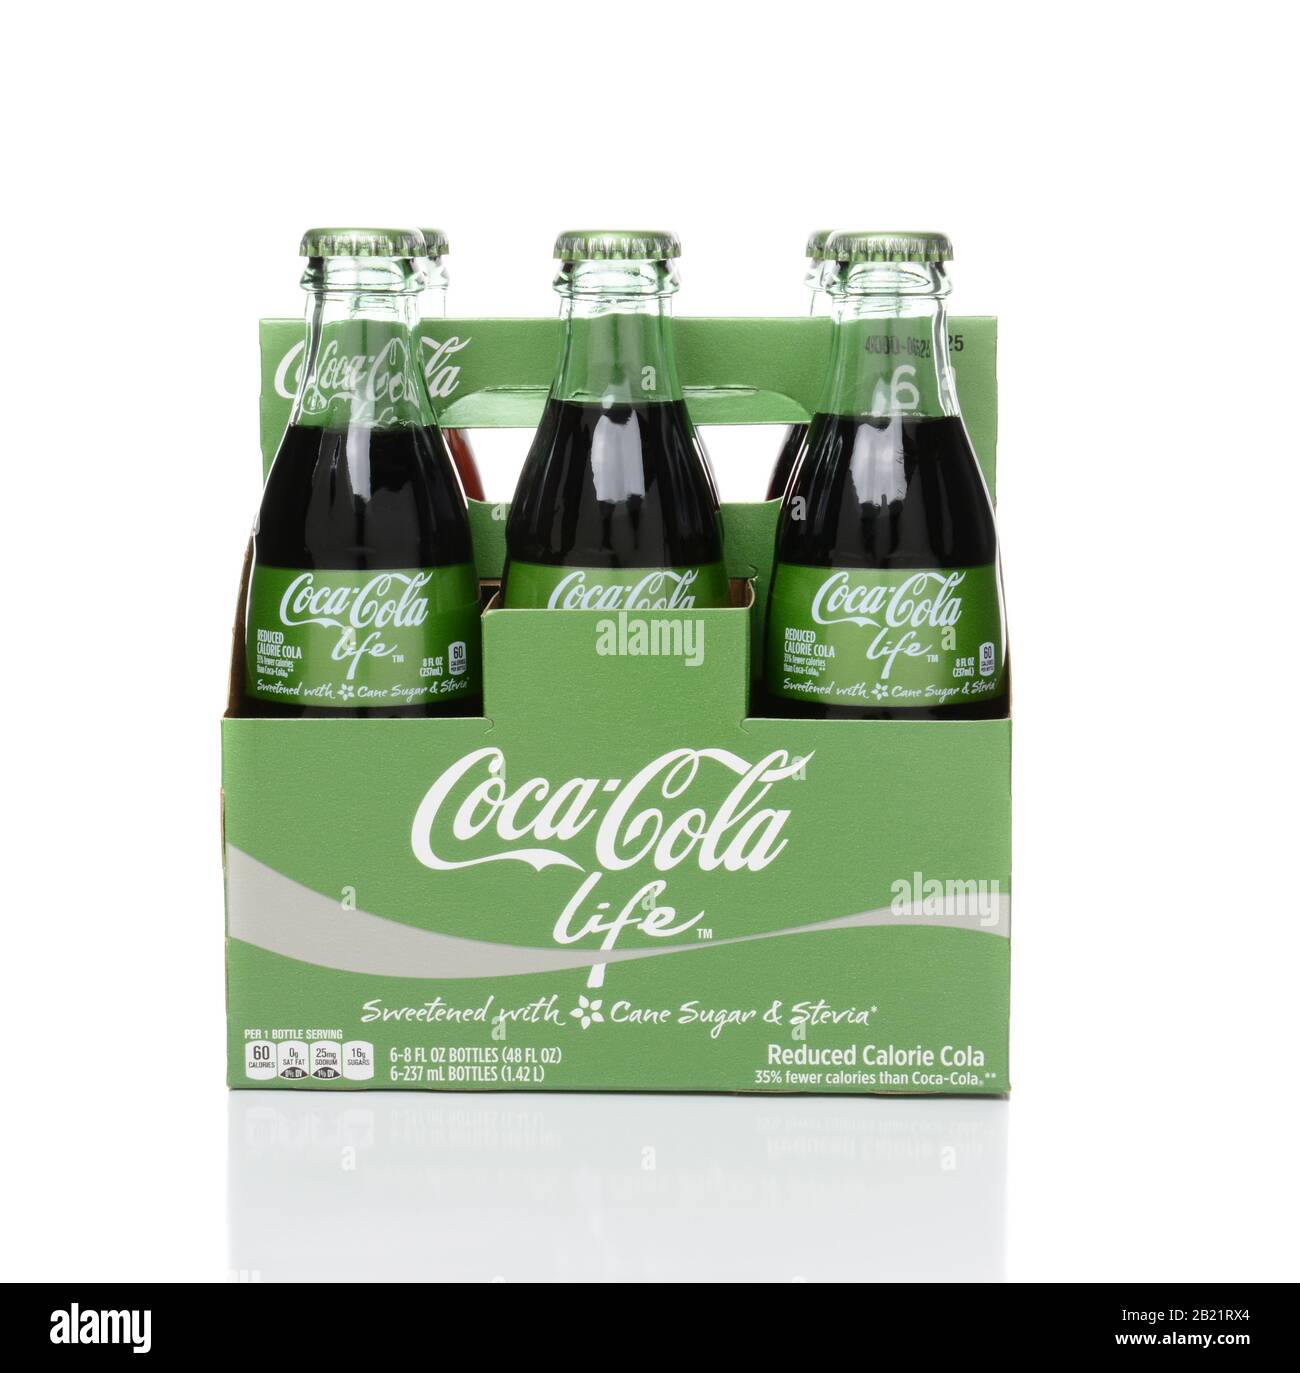 Irvine, CA - 15 DE FEBRERO de 2015: Paquete de 6 botellas de Coca-Cola Life vista lateral. Un refresco de calorías reducidas endulzado con azúcar de caña y Stevia, contienen Foto de stock